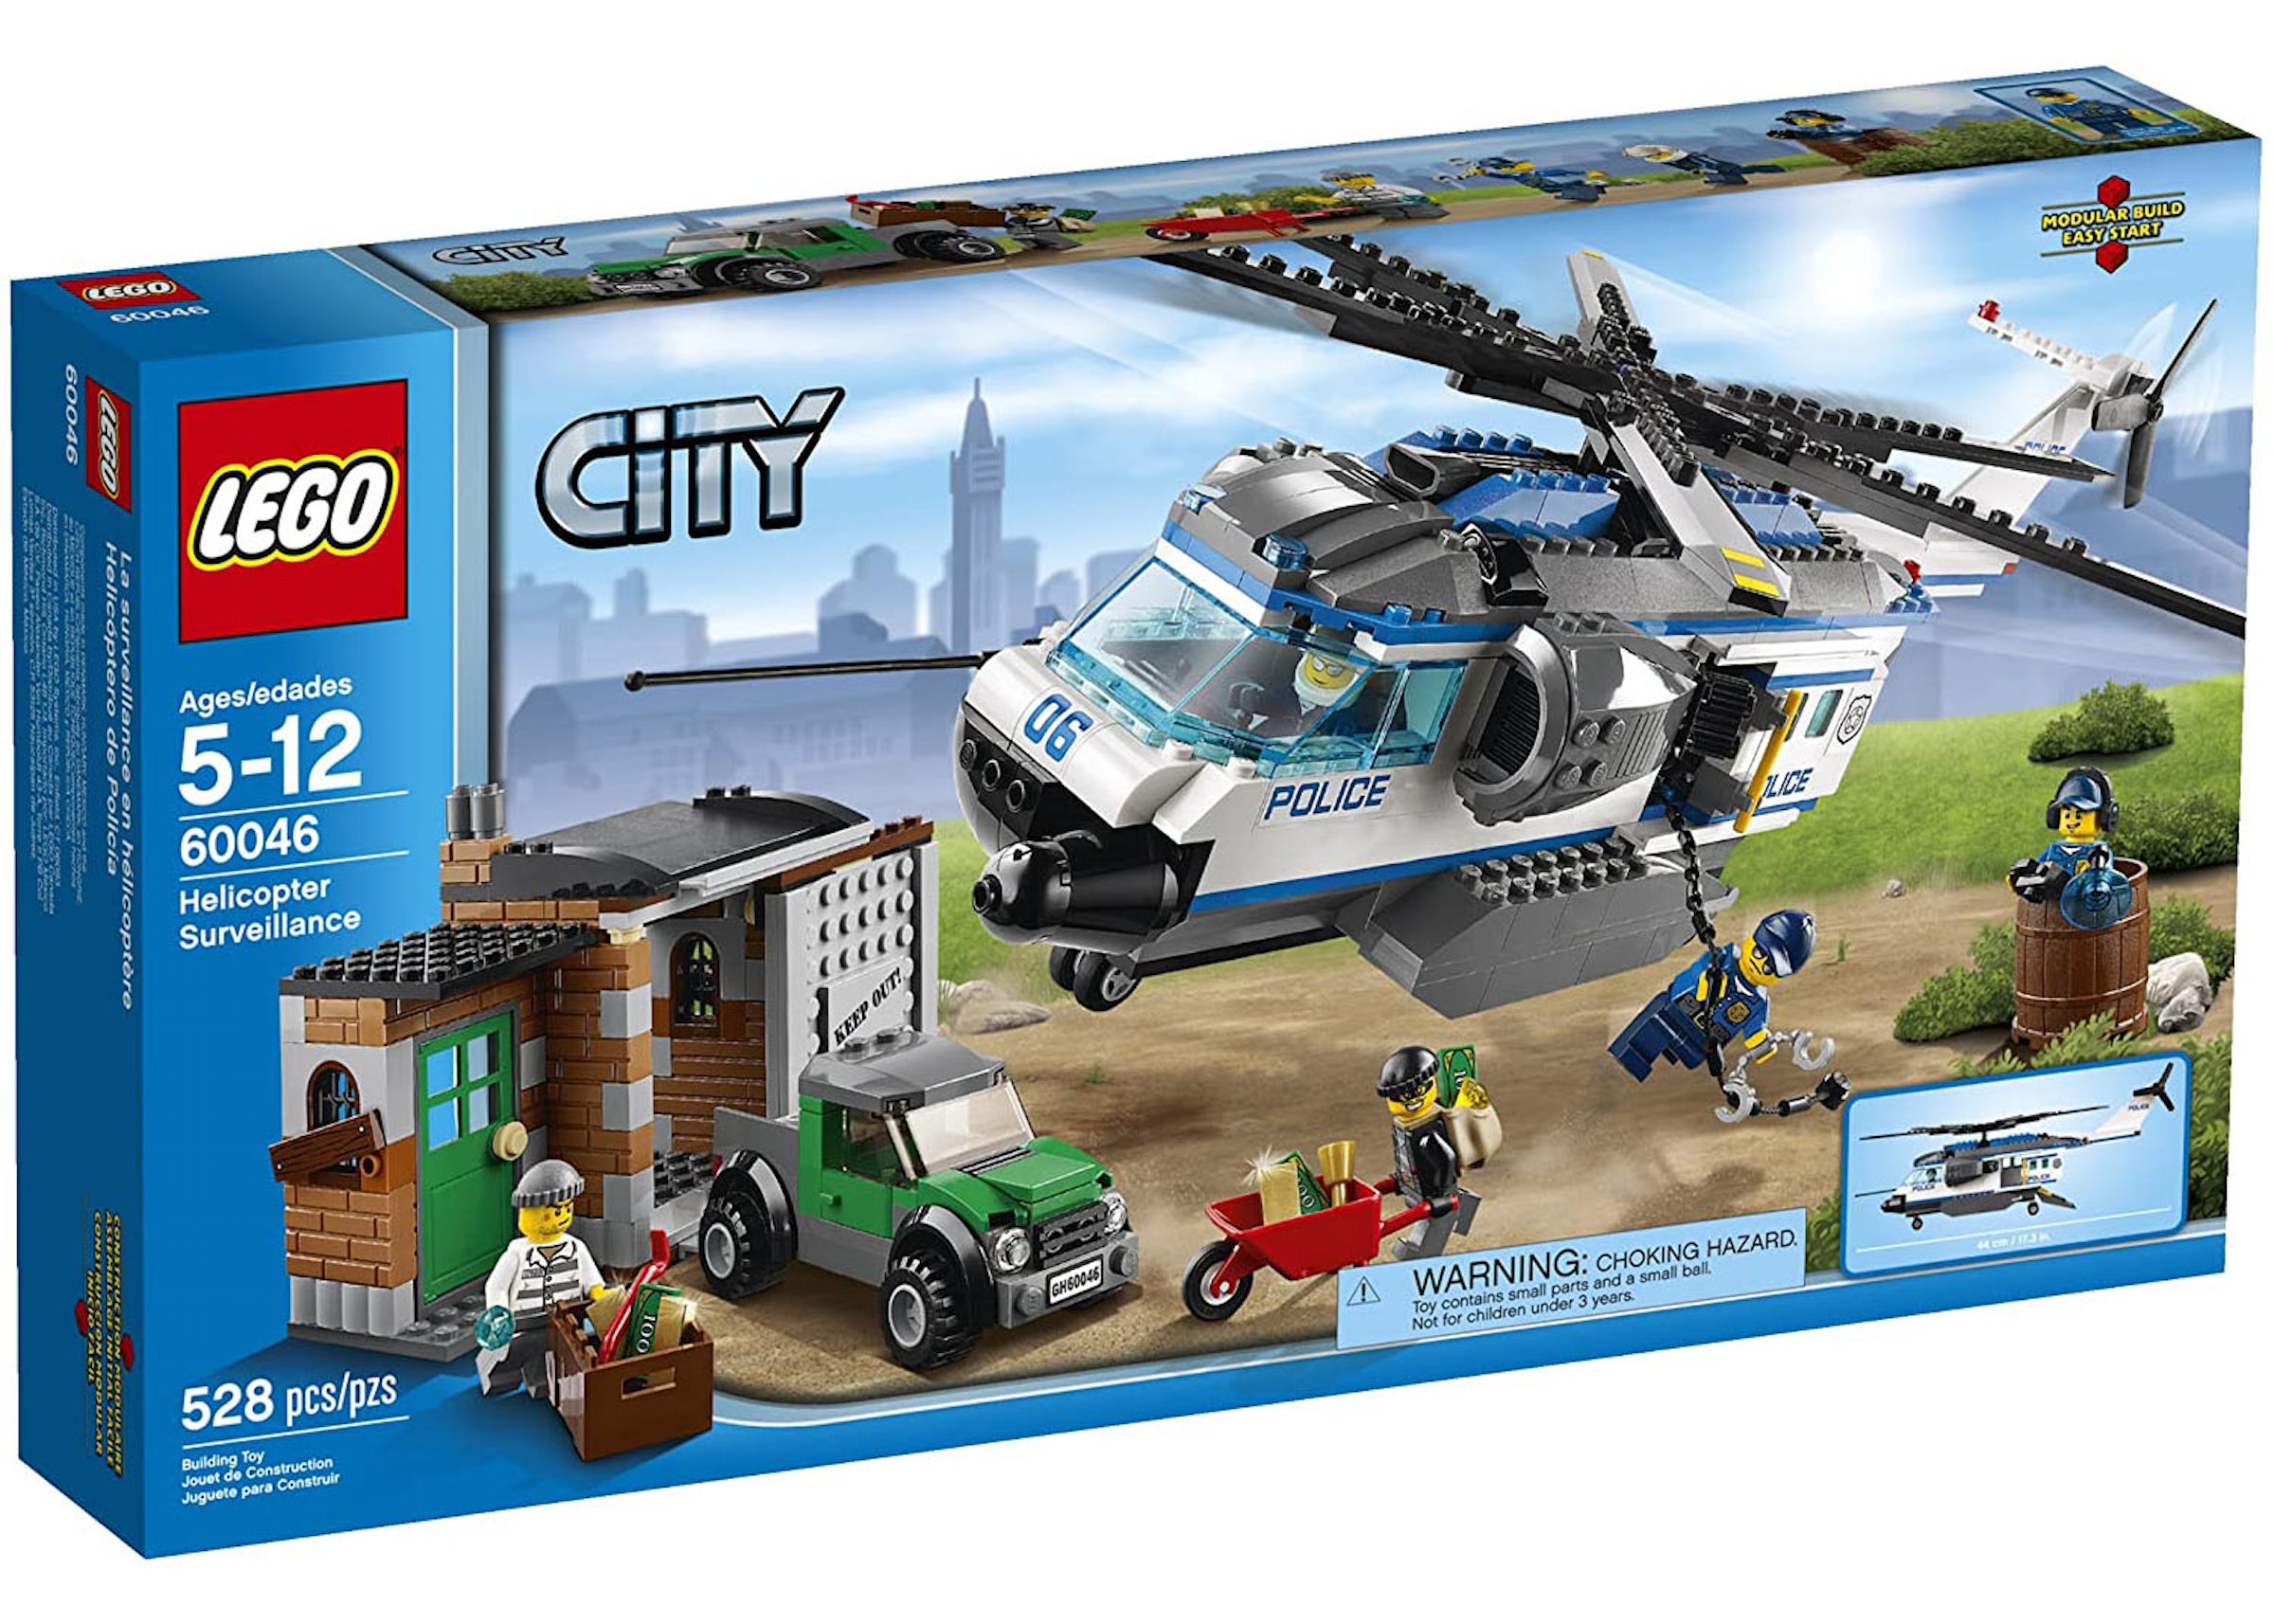 LEGO City Helicopter Surveillance Set 60046